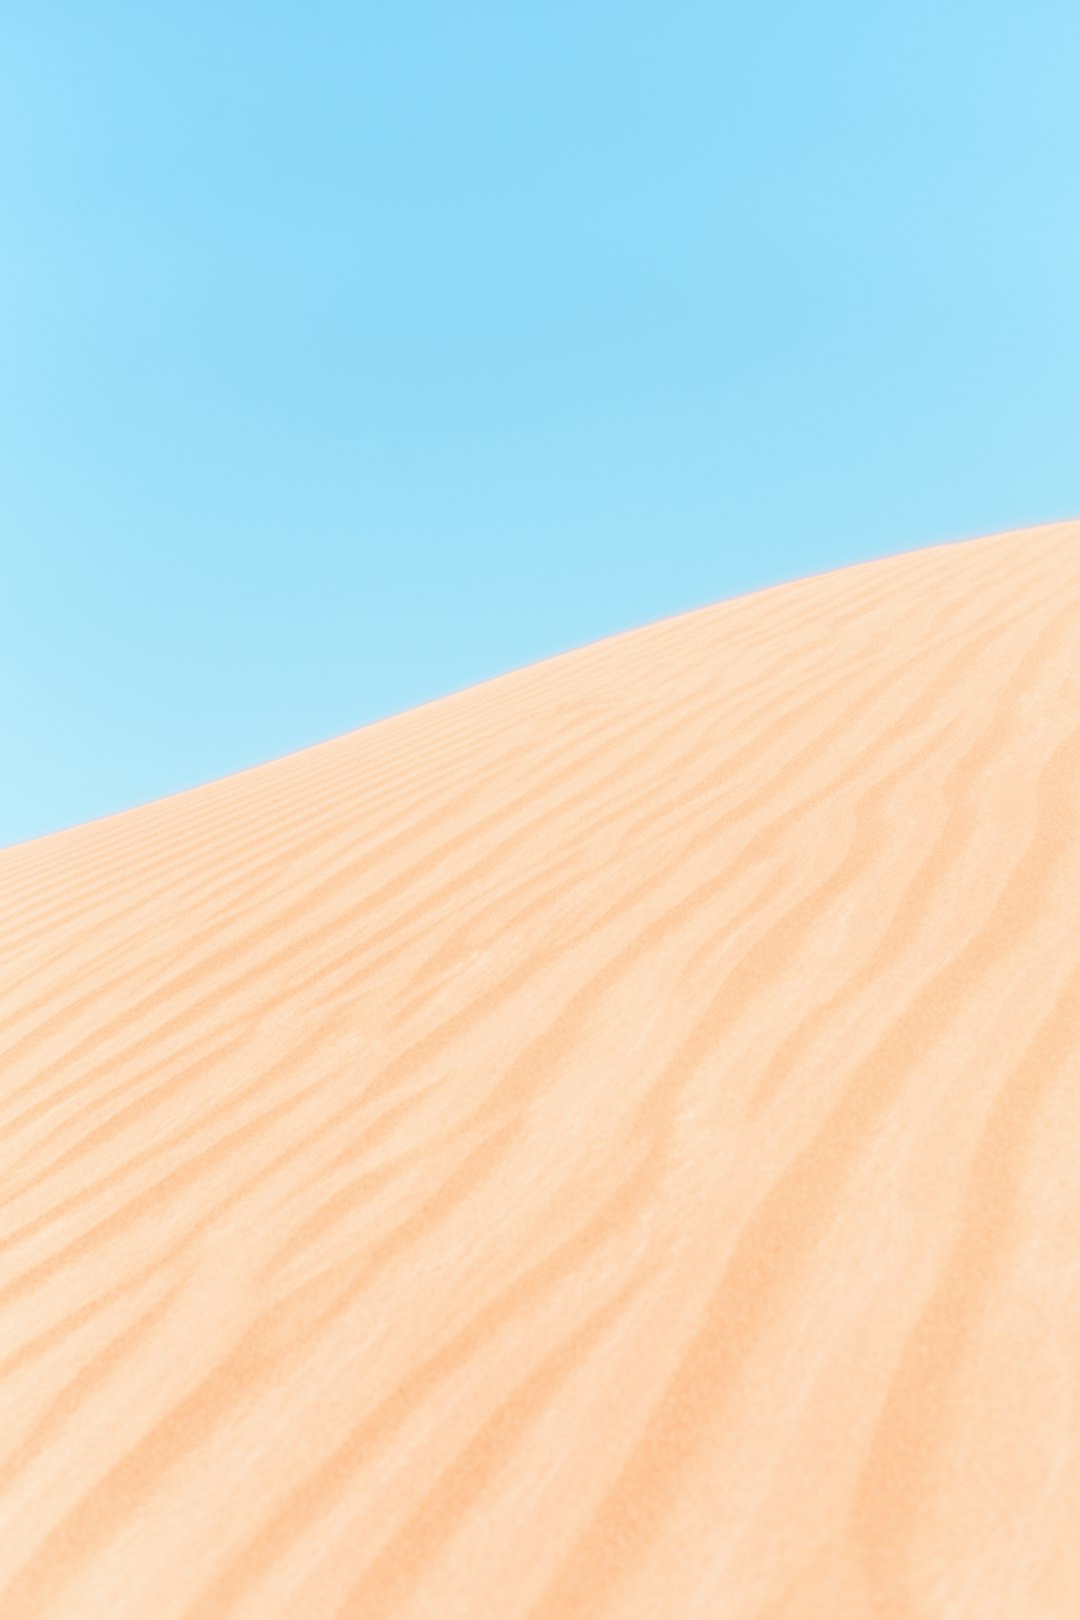 photo of Dubai - United Arab Emirates Desert near Dubai Frame